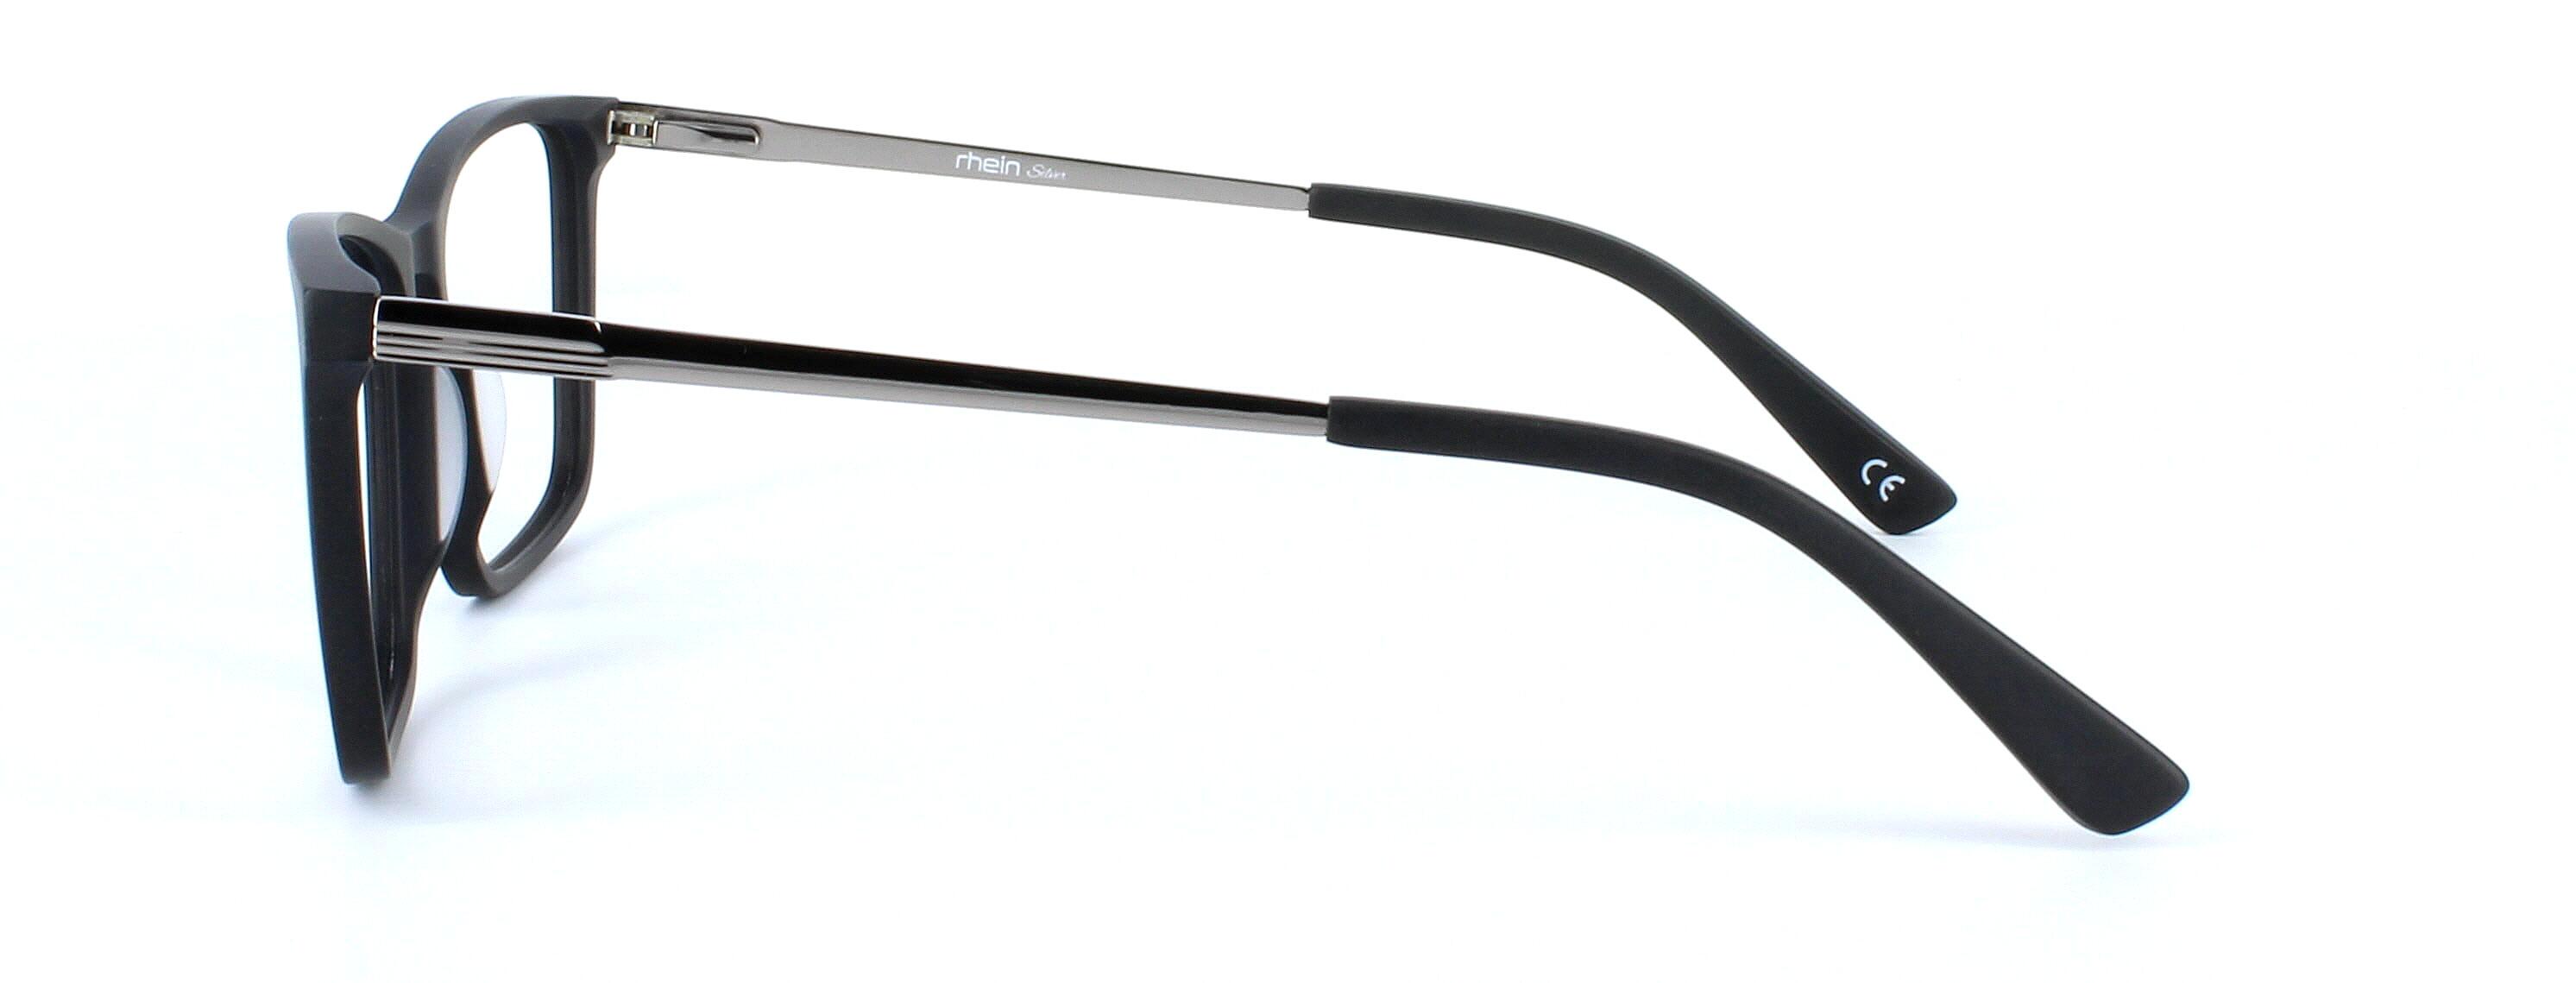 Farleigh - men's acetate glasses frame in matt black - image view 2